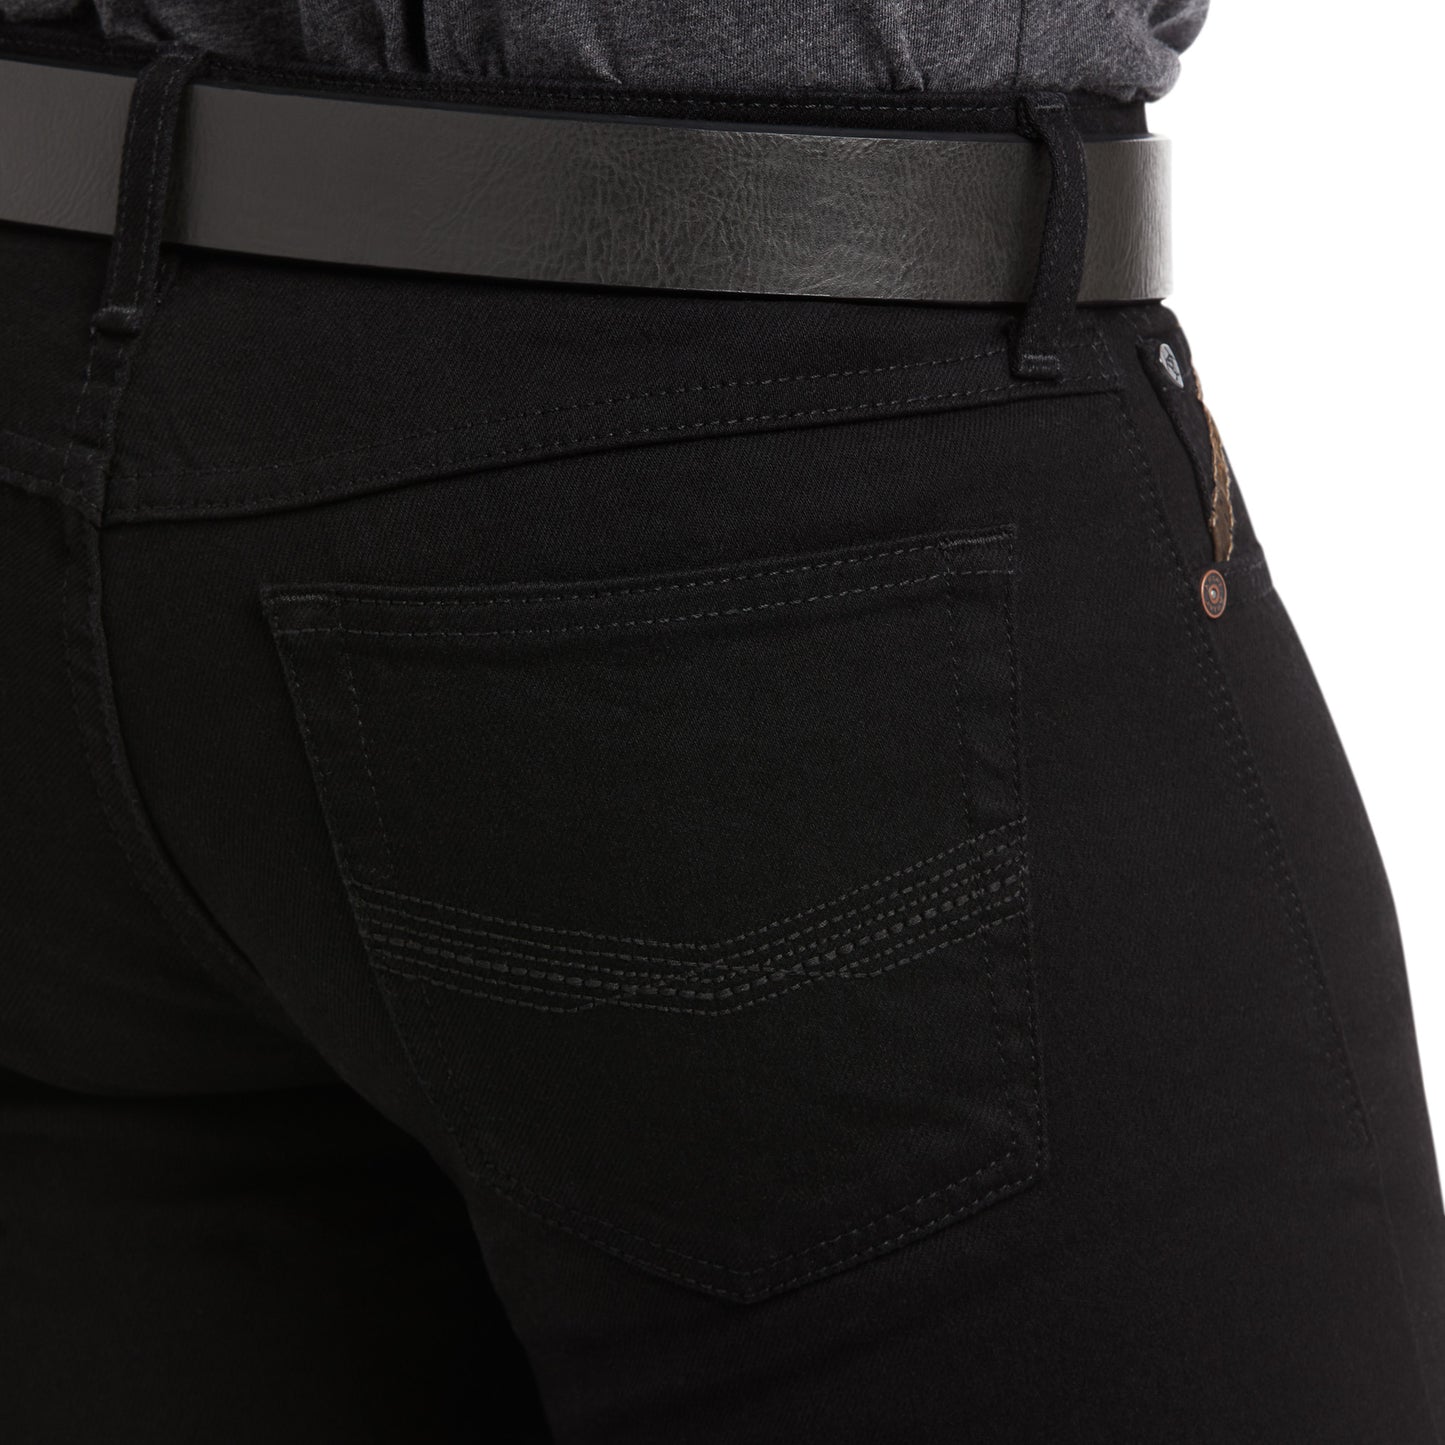 Ariat® Men's M7 Slim Legacy Straight Black Jeans 10037890